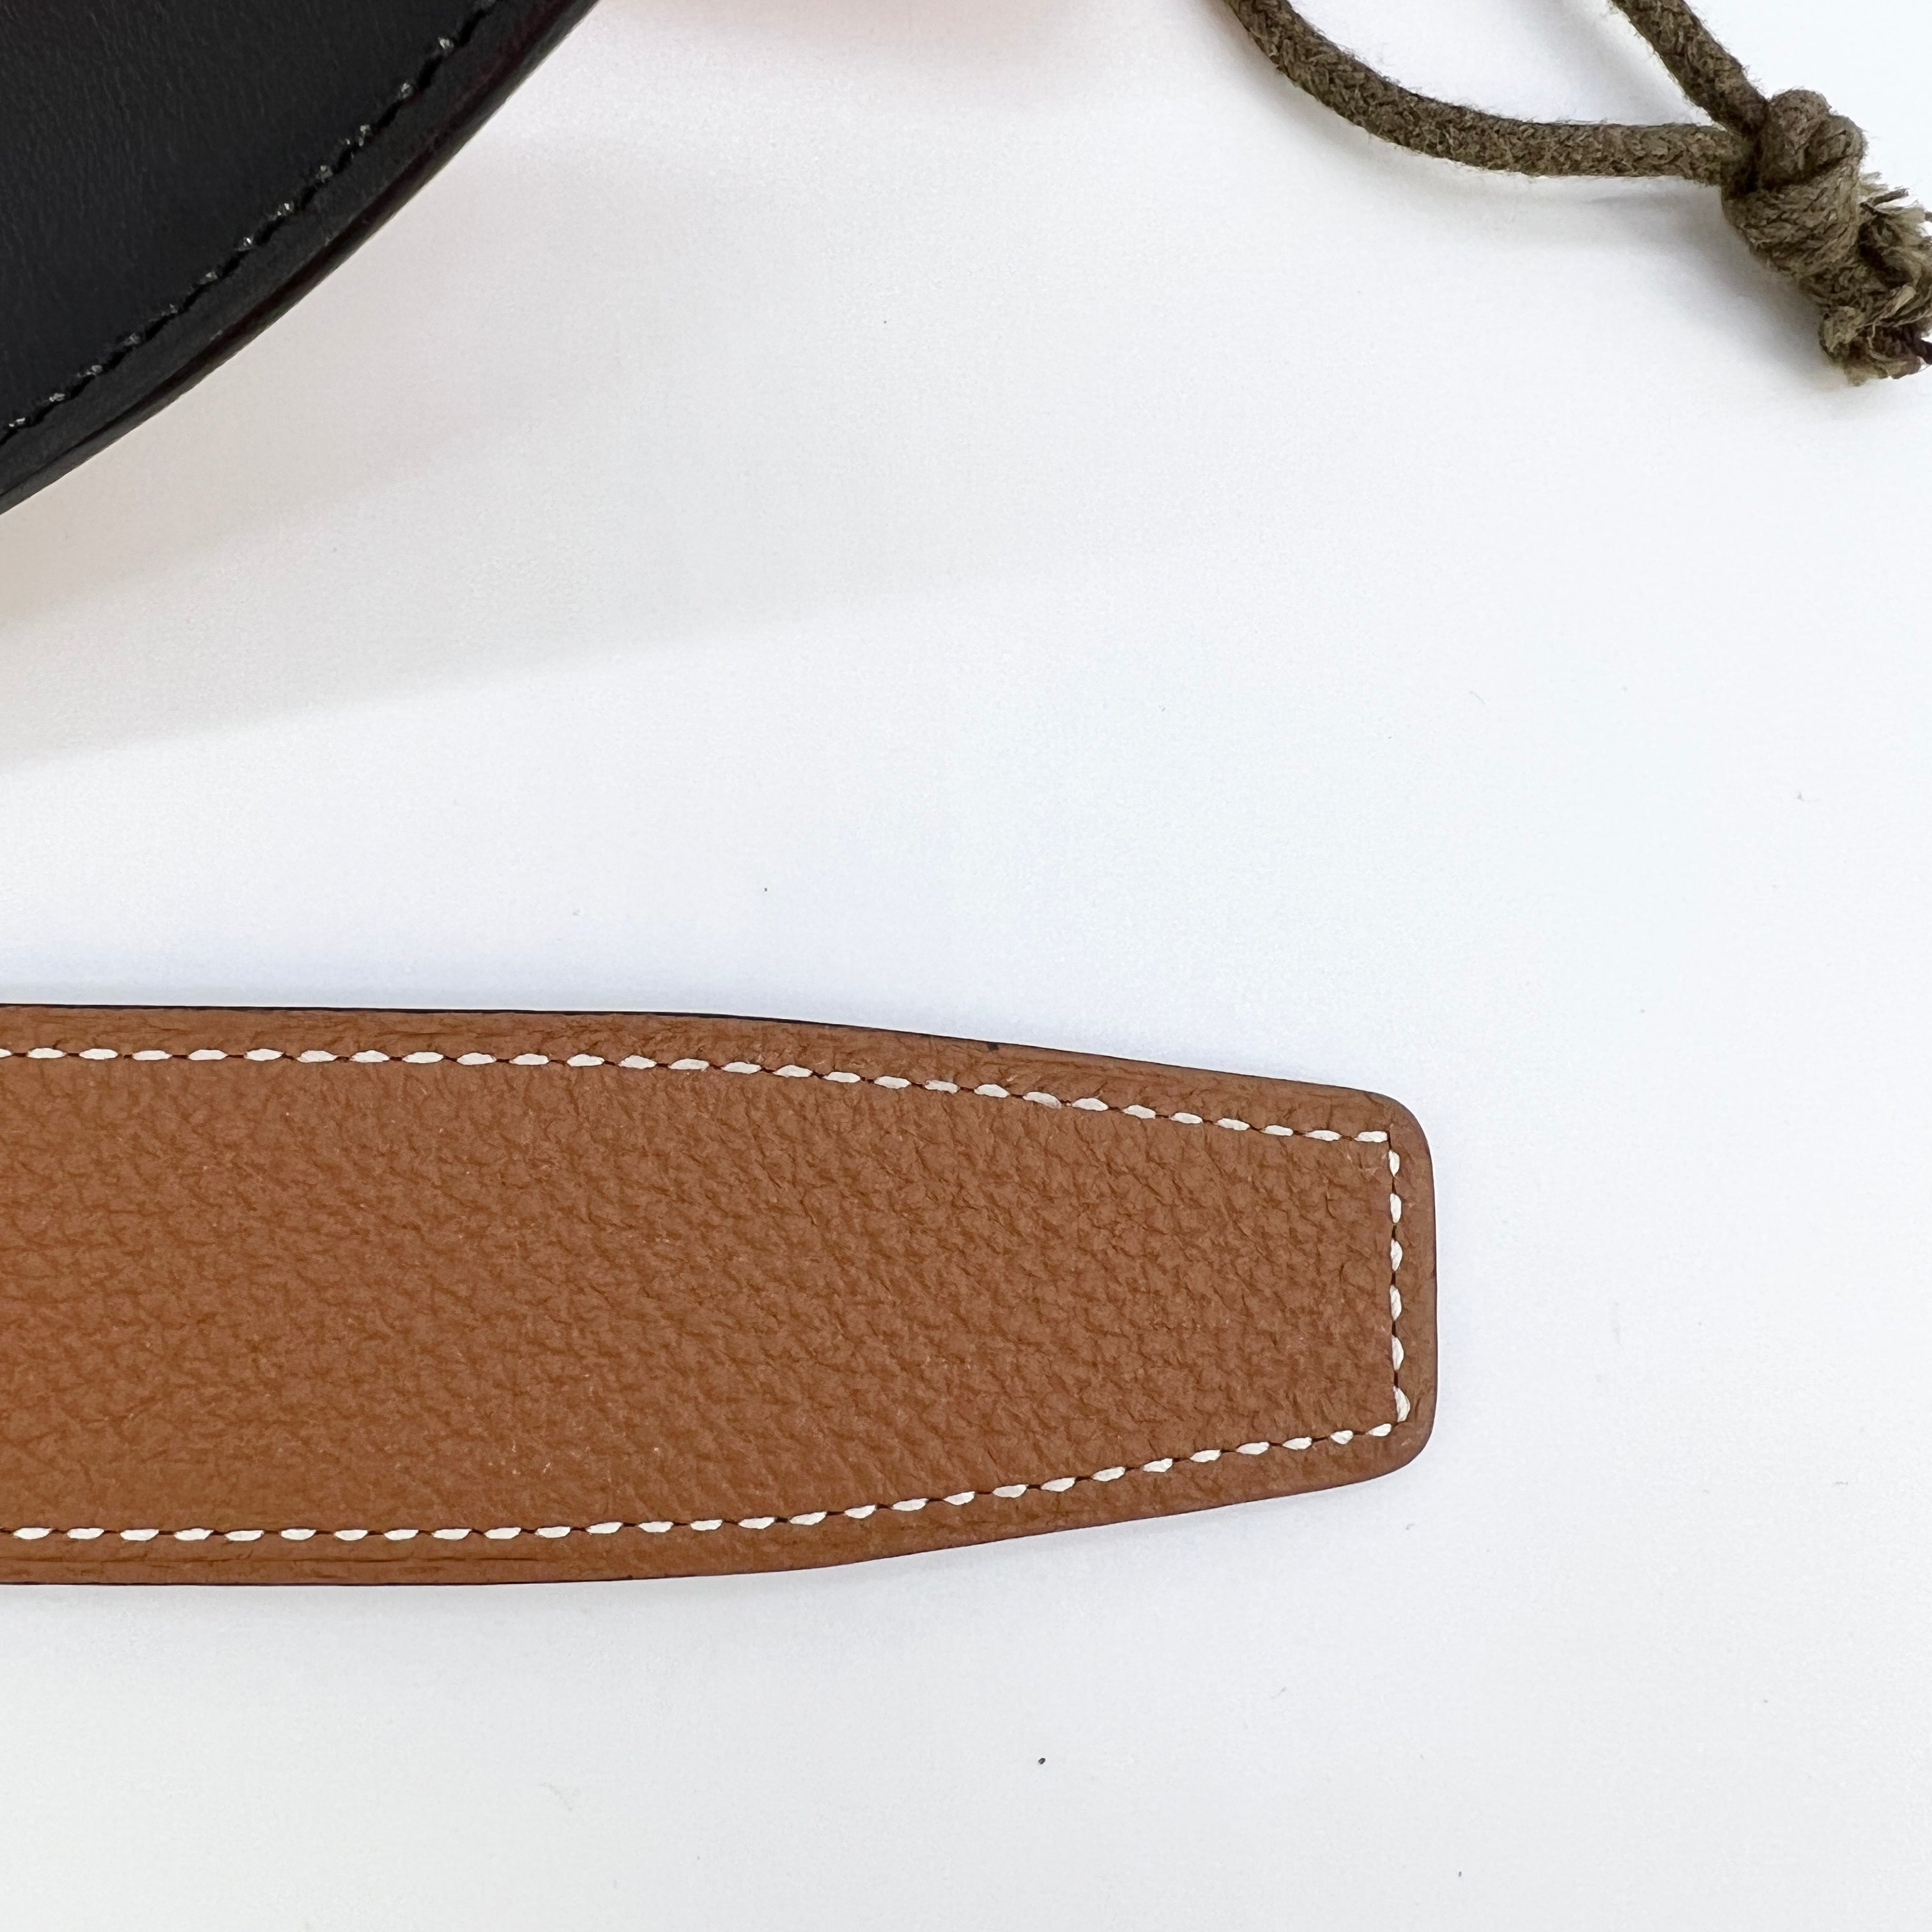 Hermes H Strie Buckle Reversible Belt Leather Medium 85 Black/Brown [Guaranteed authentic]